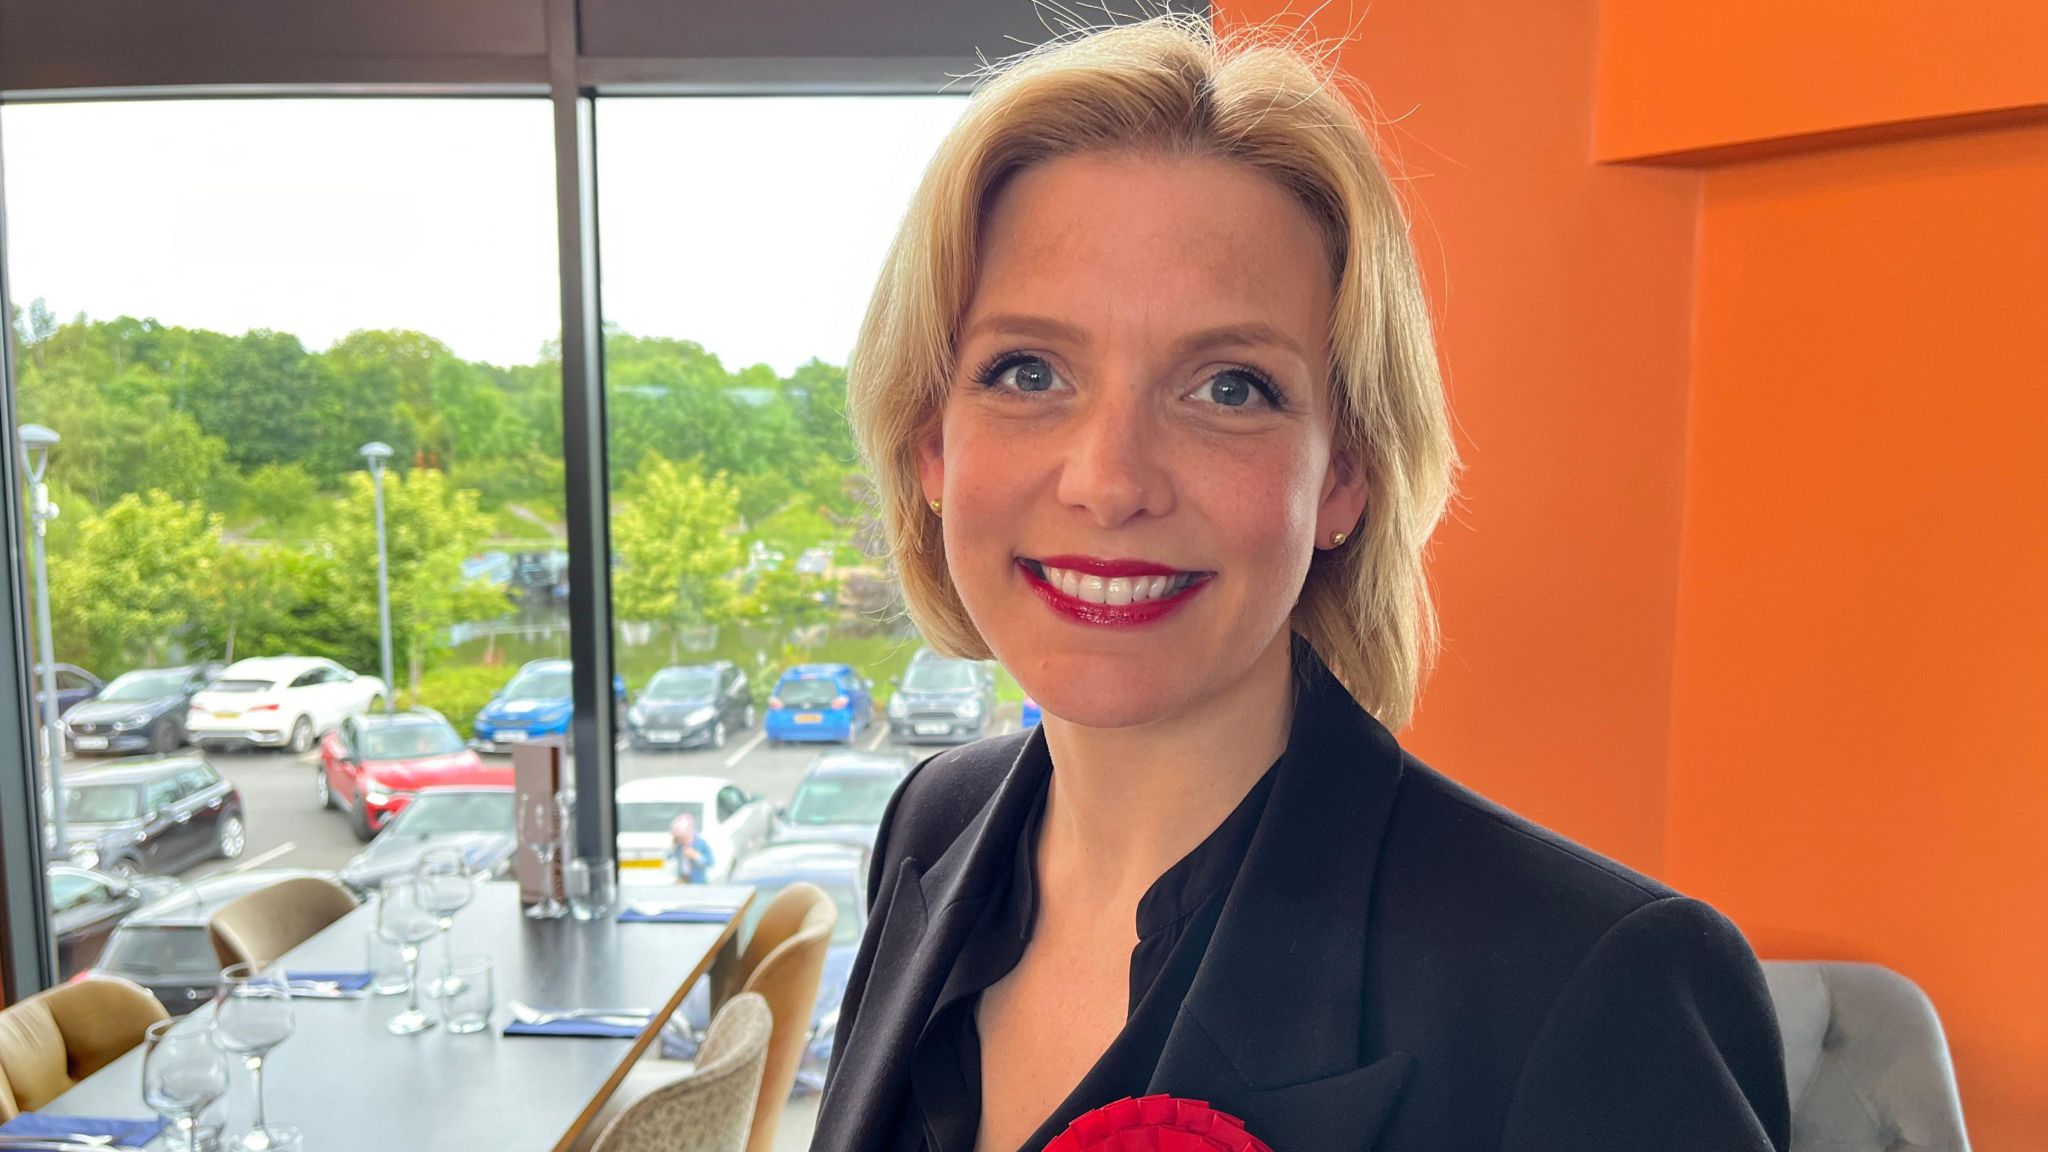 Labour candidate Samantha Niblett